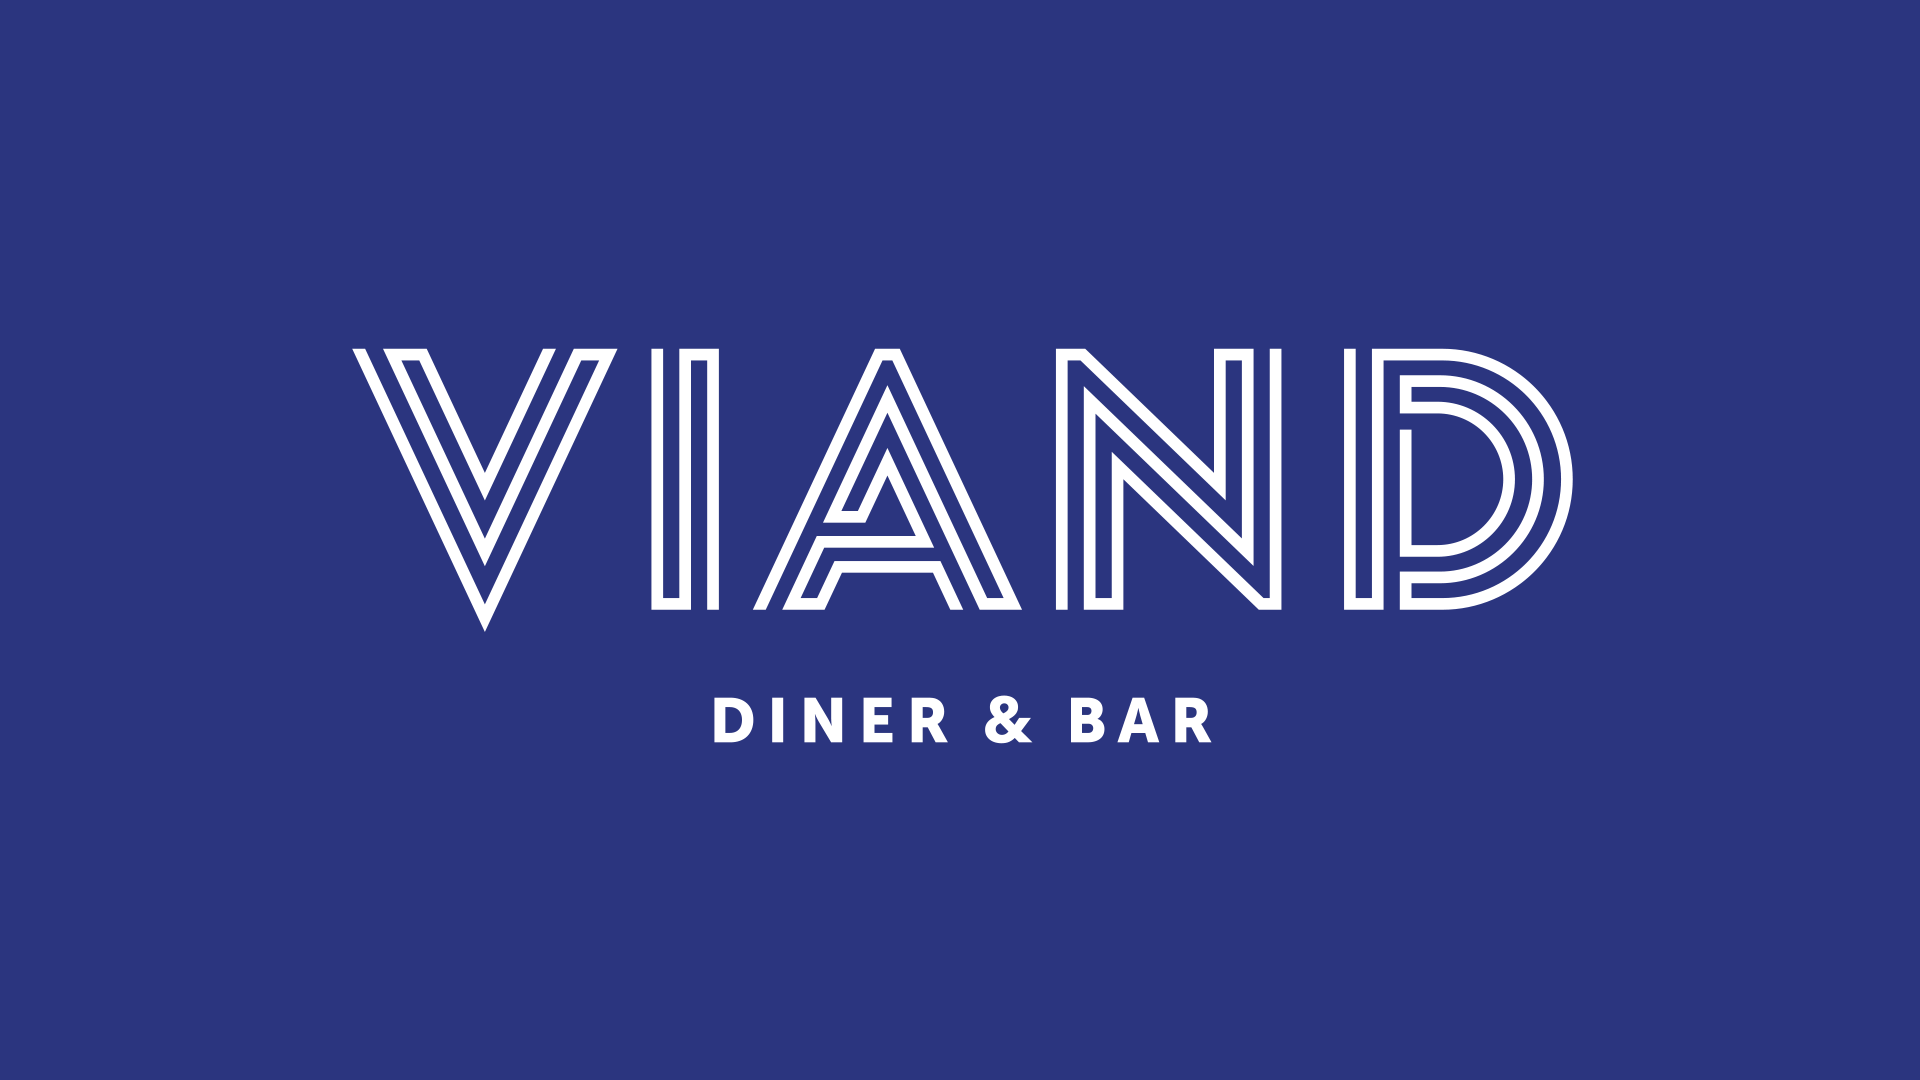 Viand logo